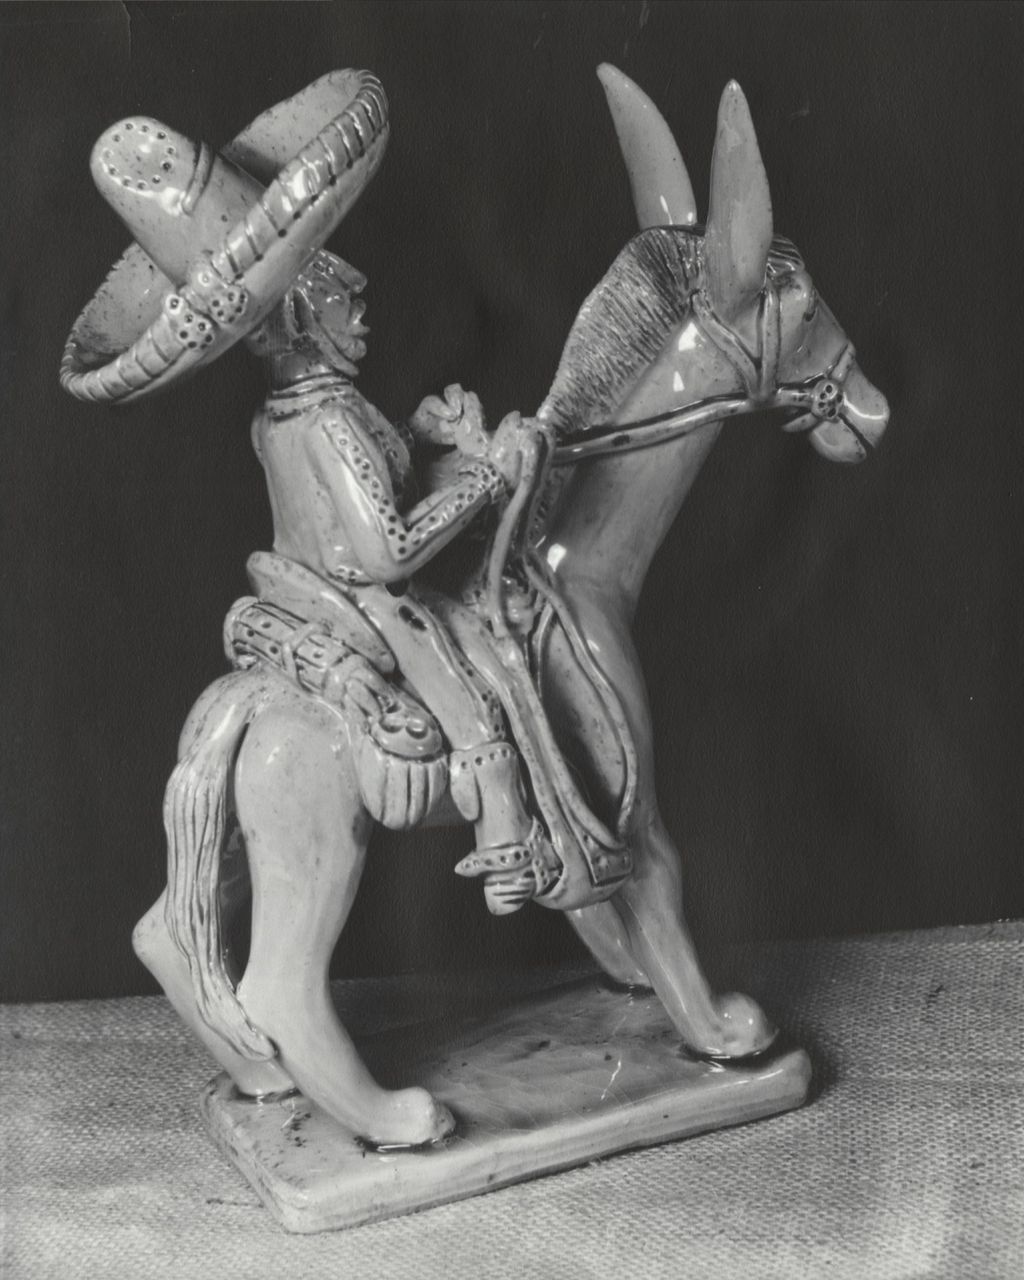 Miniature of Ceramic sculpture of a Mexican cowboy on horseback